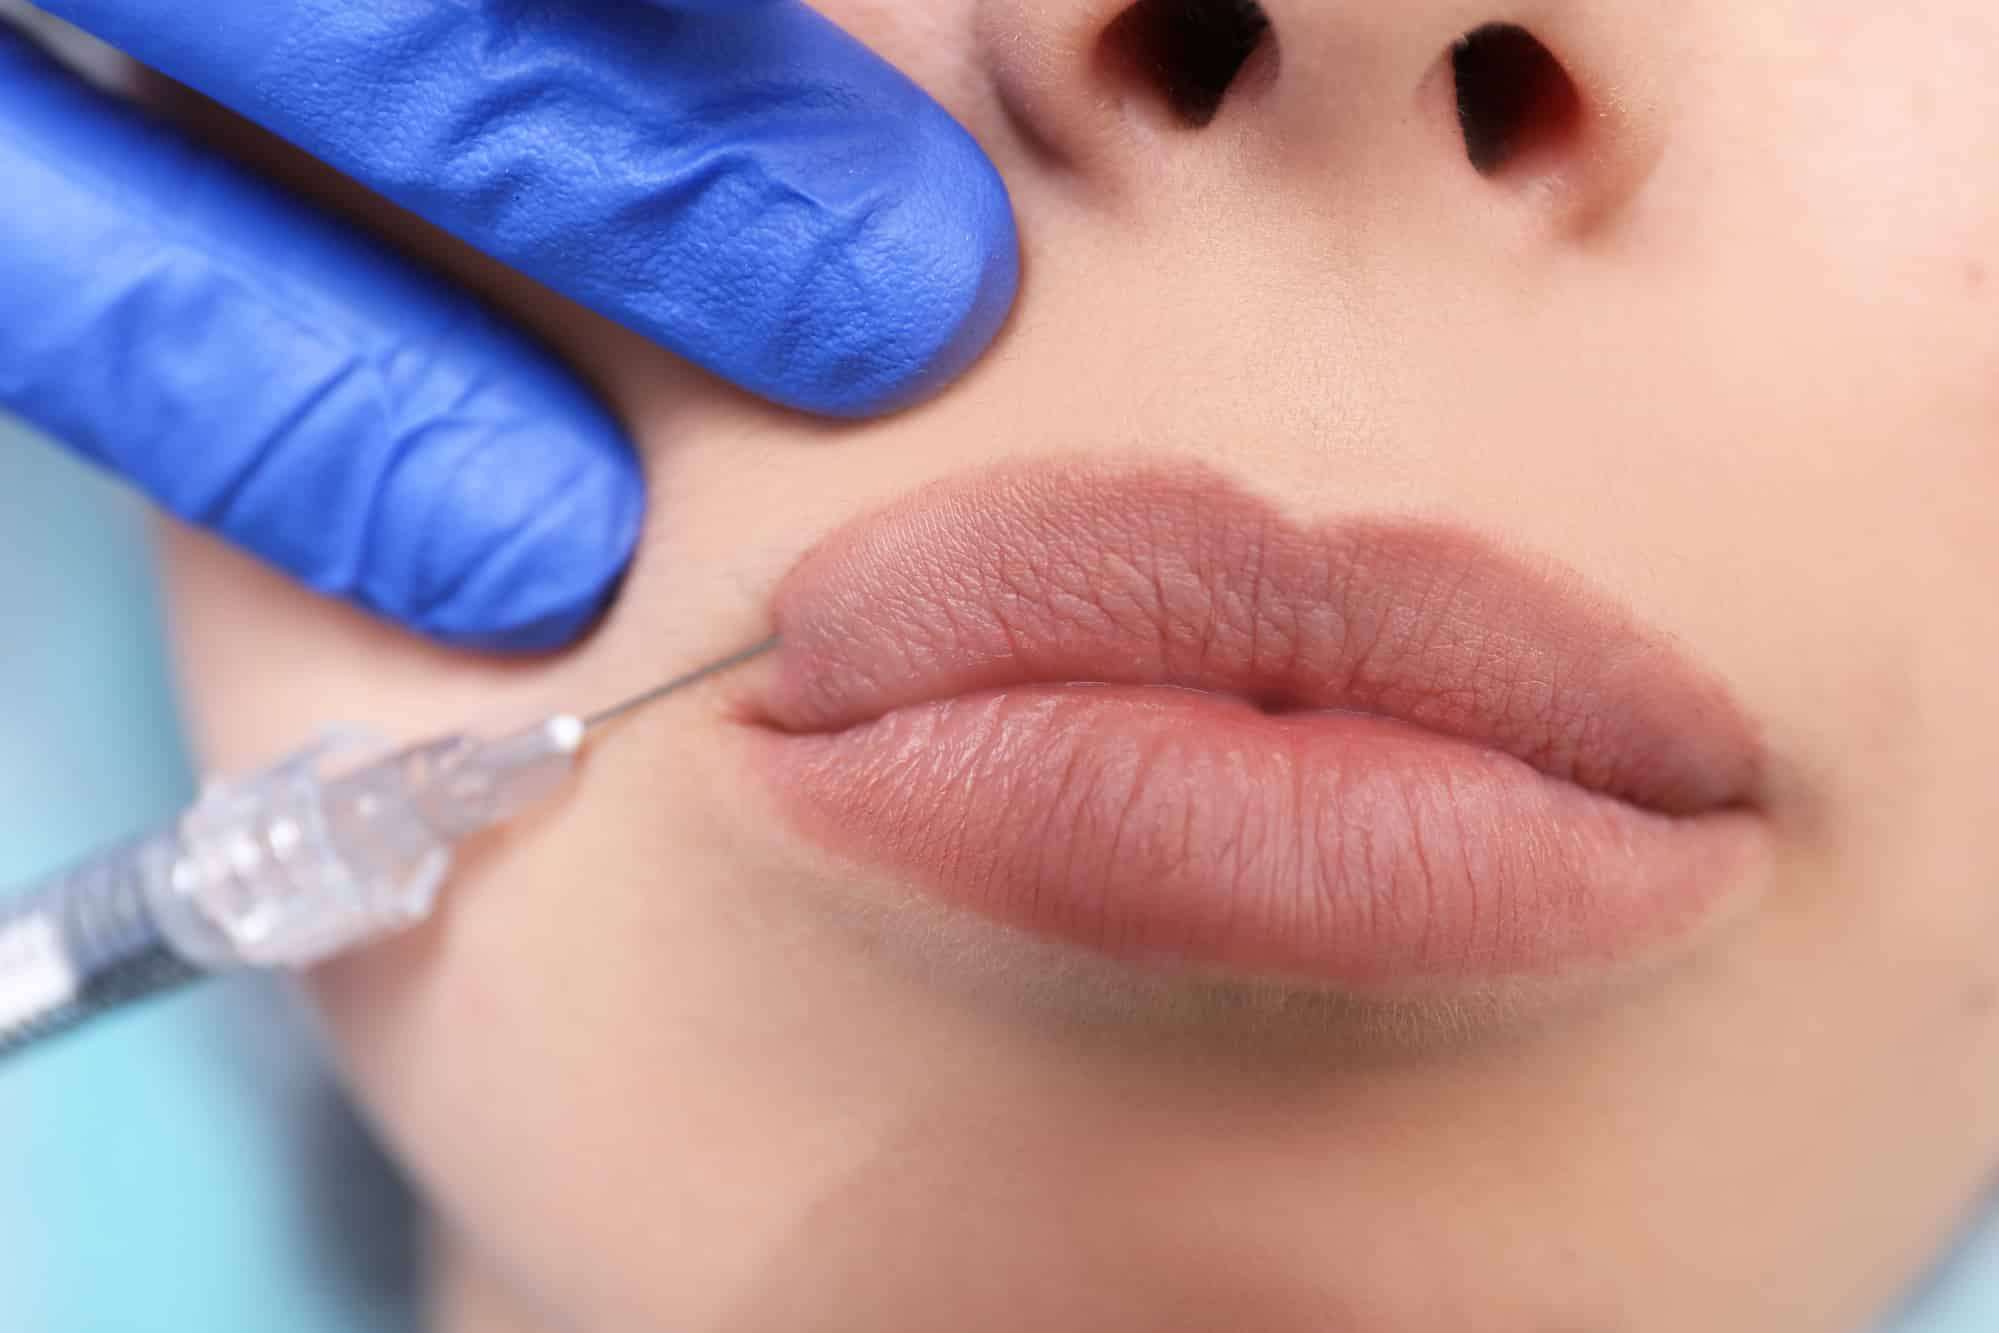 Увеличение губ препаратом Belotero Lips Shape (0,6 мл)